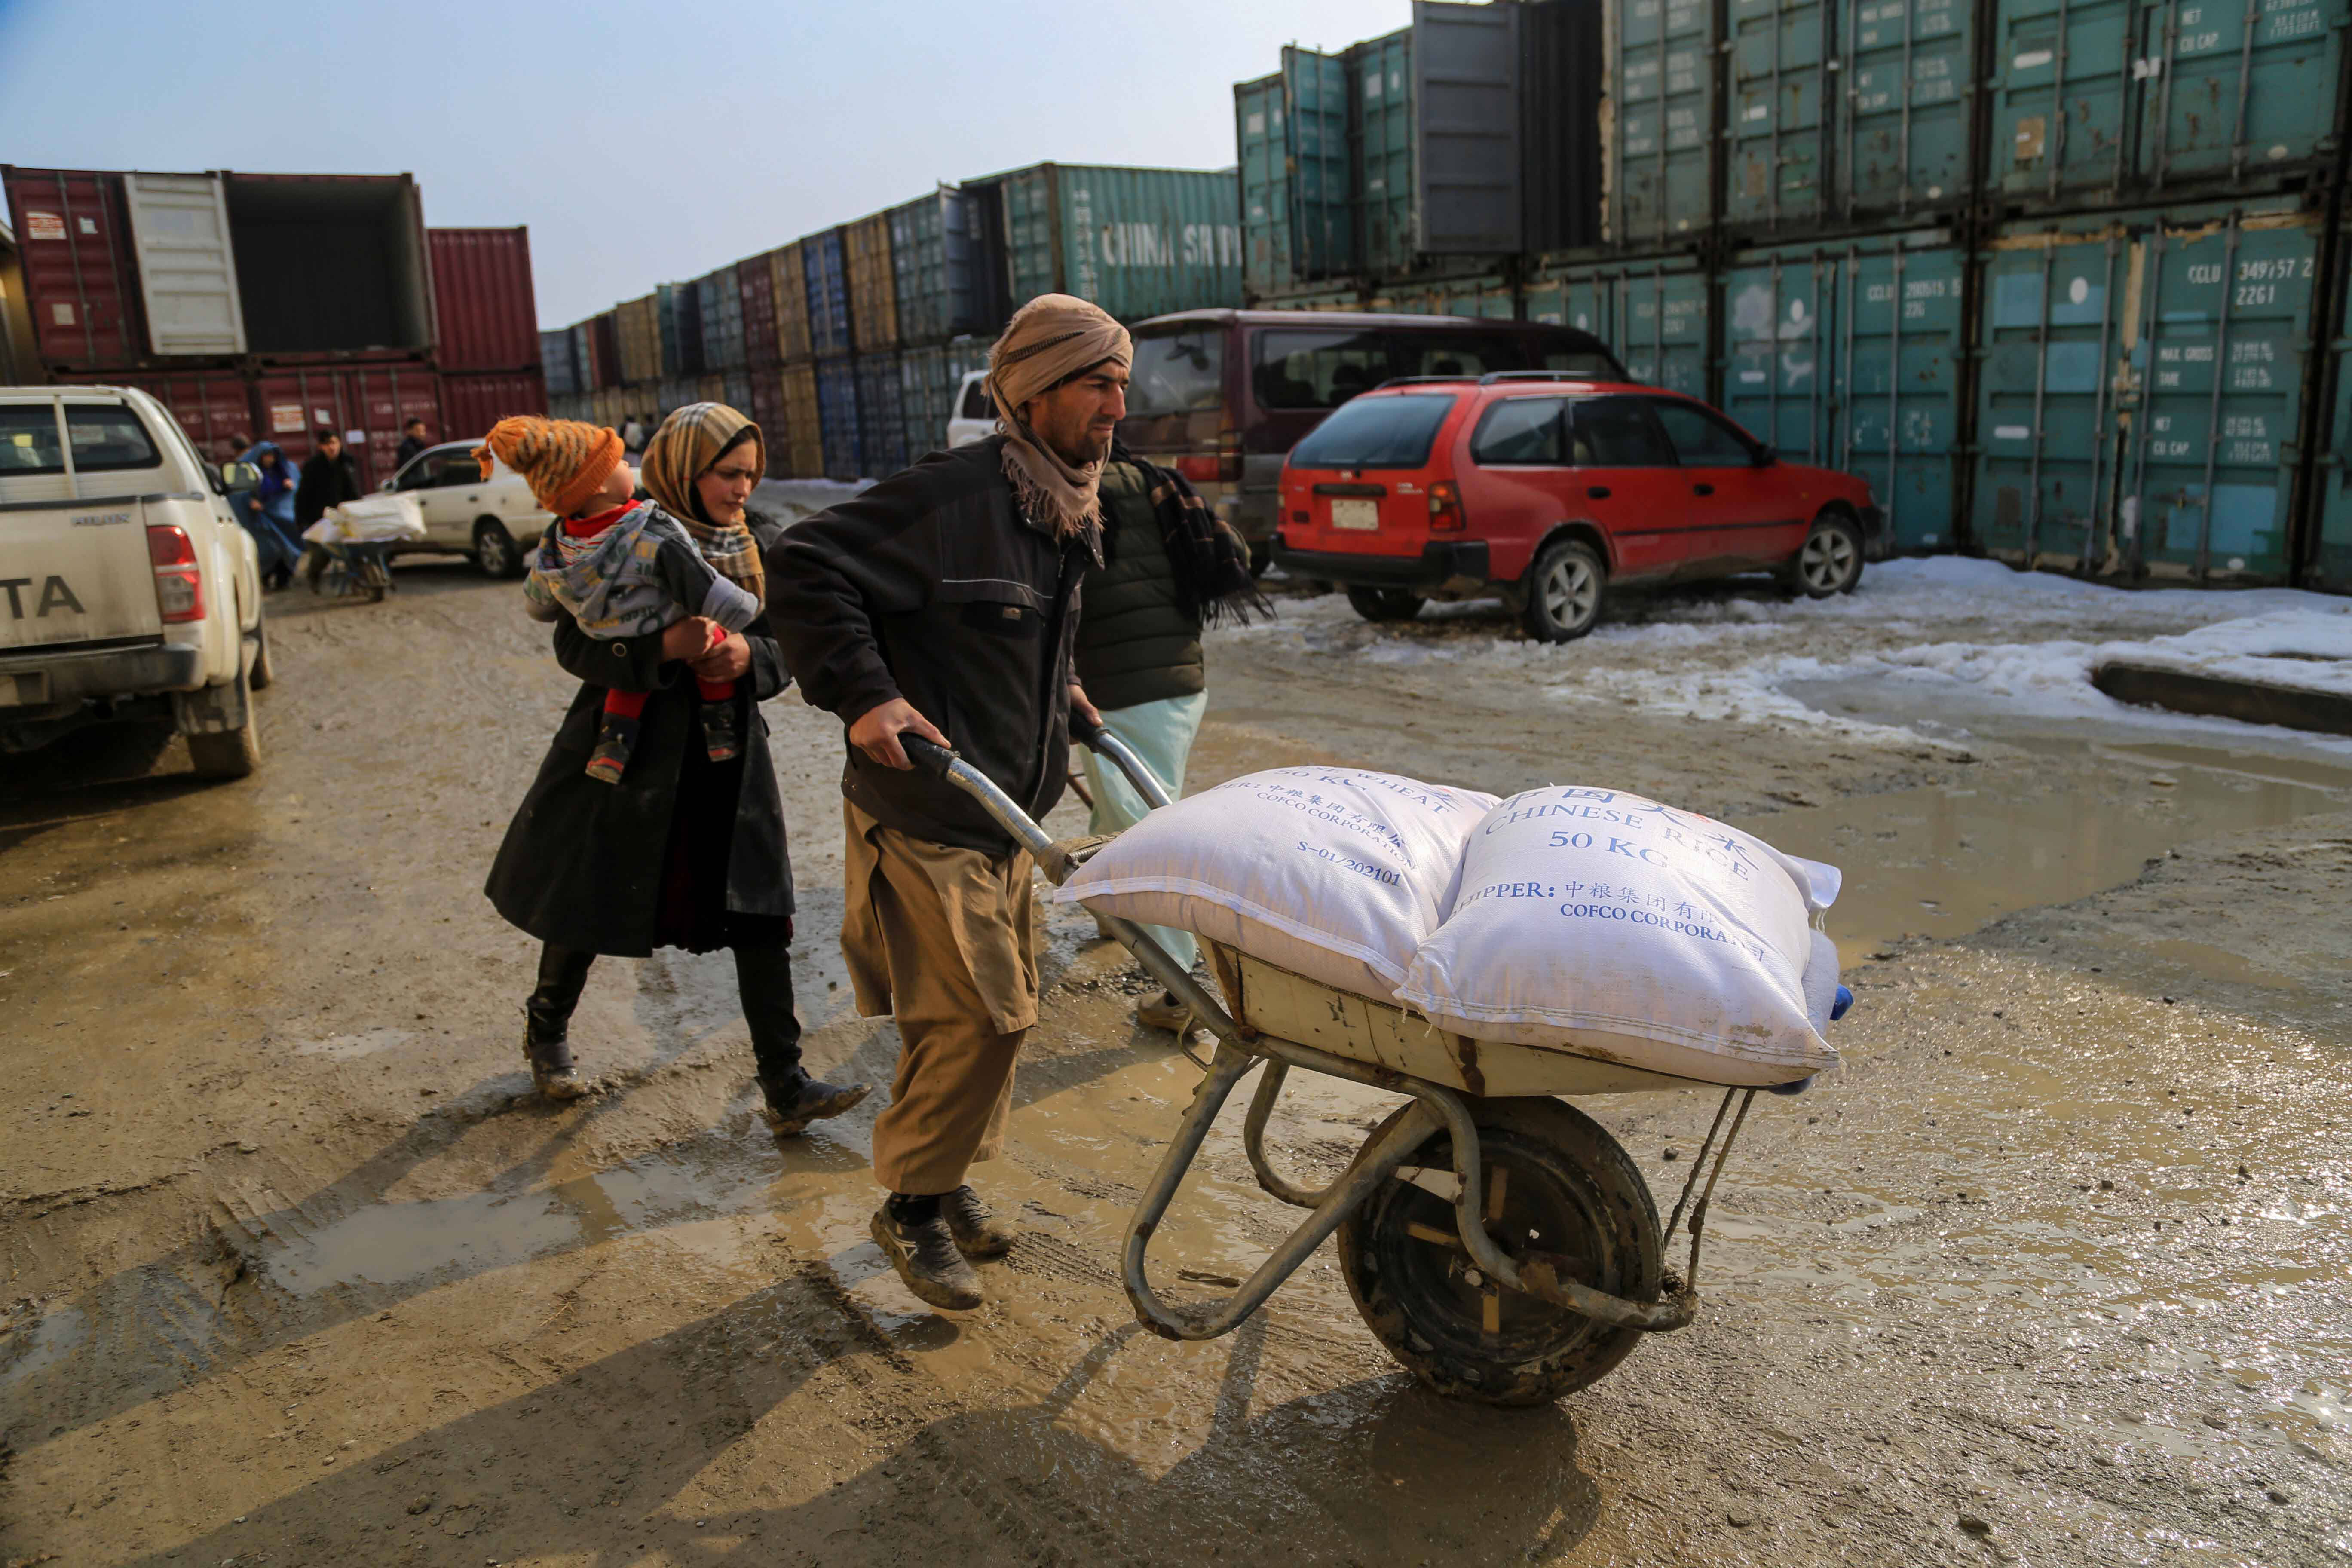 Afghans receive food aid distributed by UNICEF in Kabul on Jan. 18. (Stringer/EPA-EFE/REX/Shutterstock)